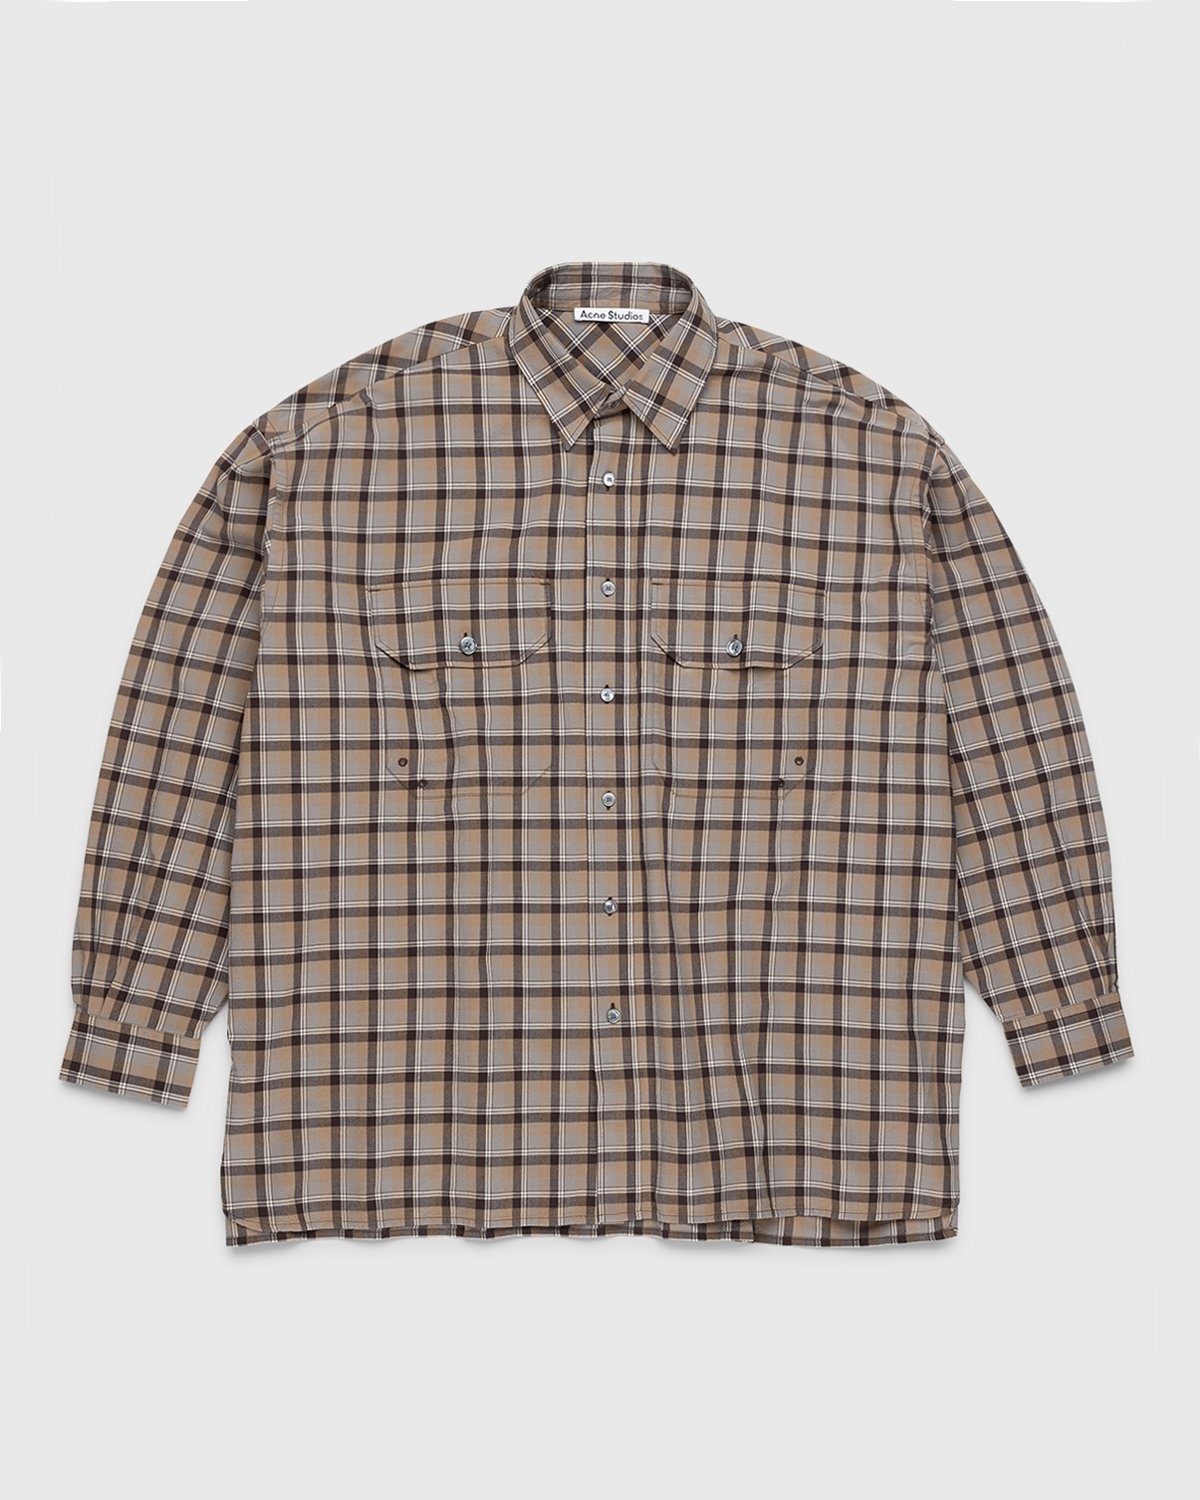 Acne Studios – Checked Shirt Brown - Longsleeve Shirts - Brown - Image 1